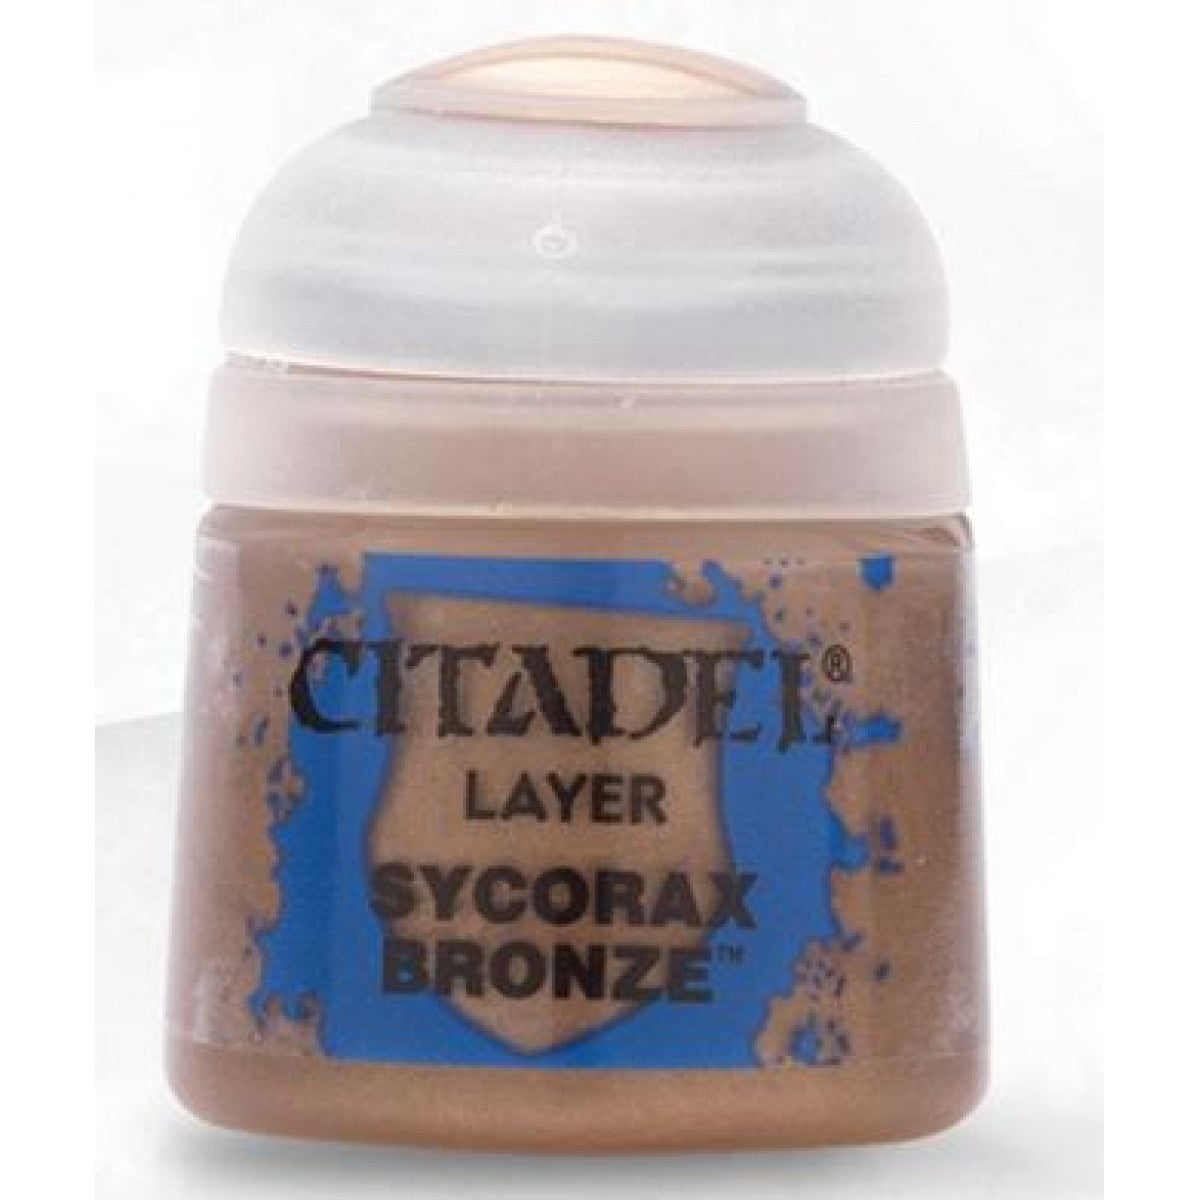 Citadel Layer Paint - Sycorax Bronze 12ml (22-64)